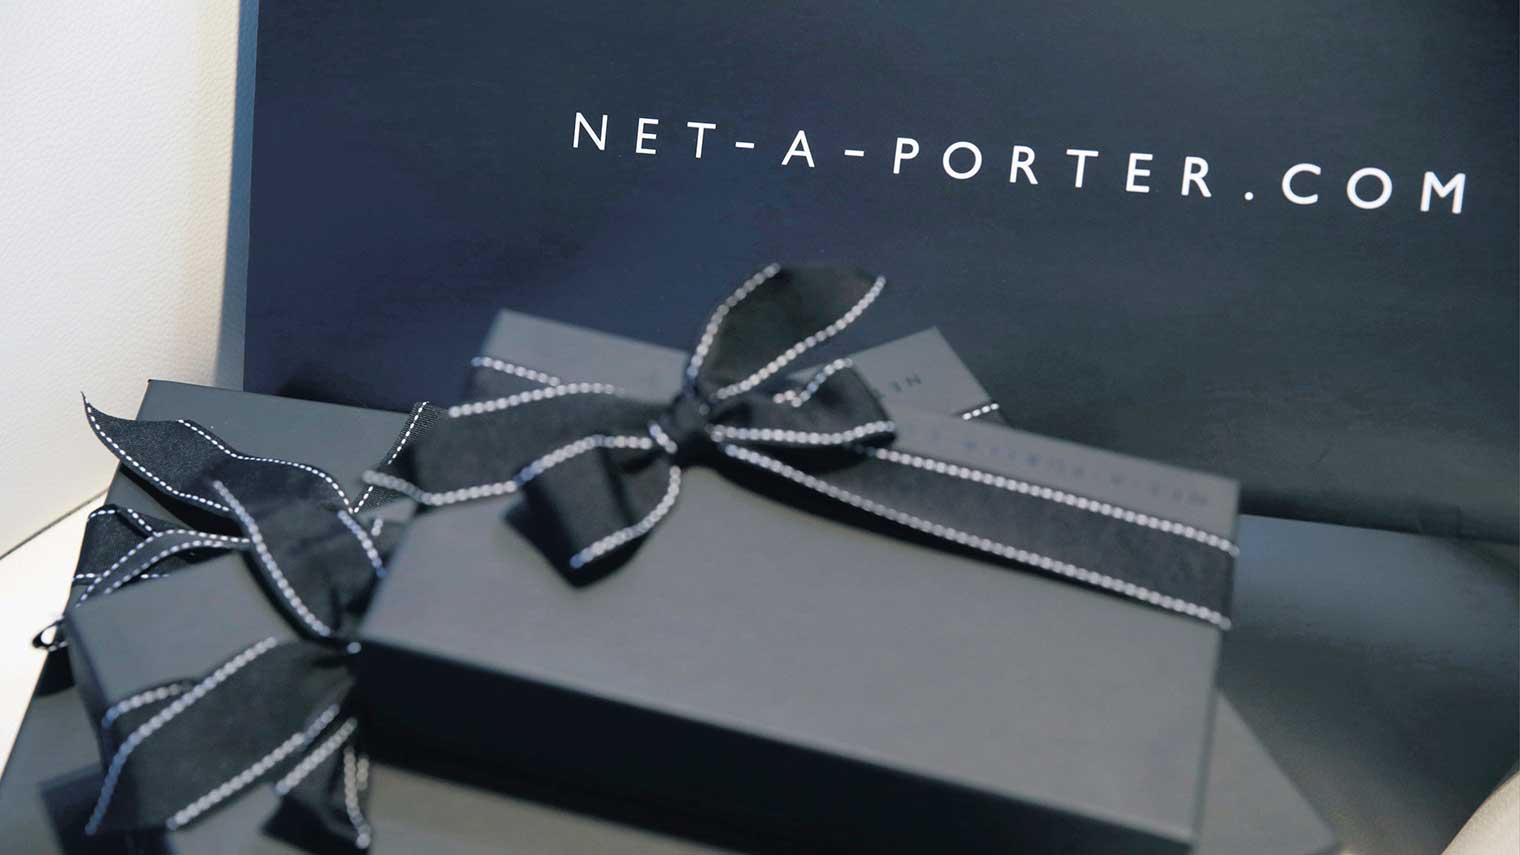 Yoox Net-A-Porter names new chief executive